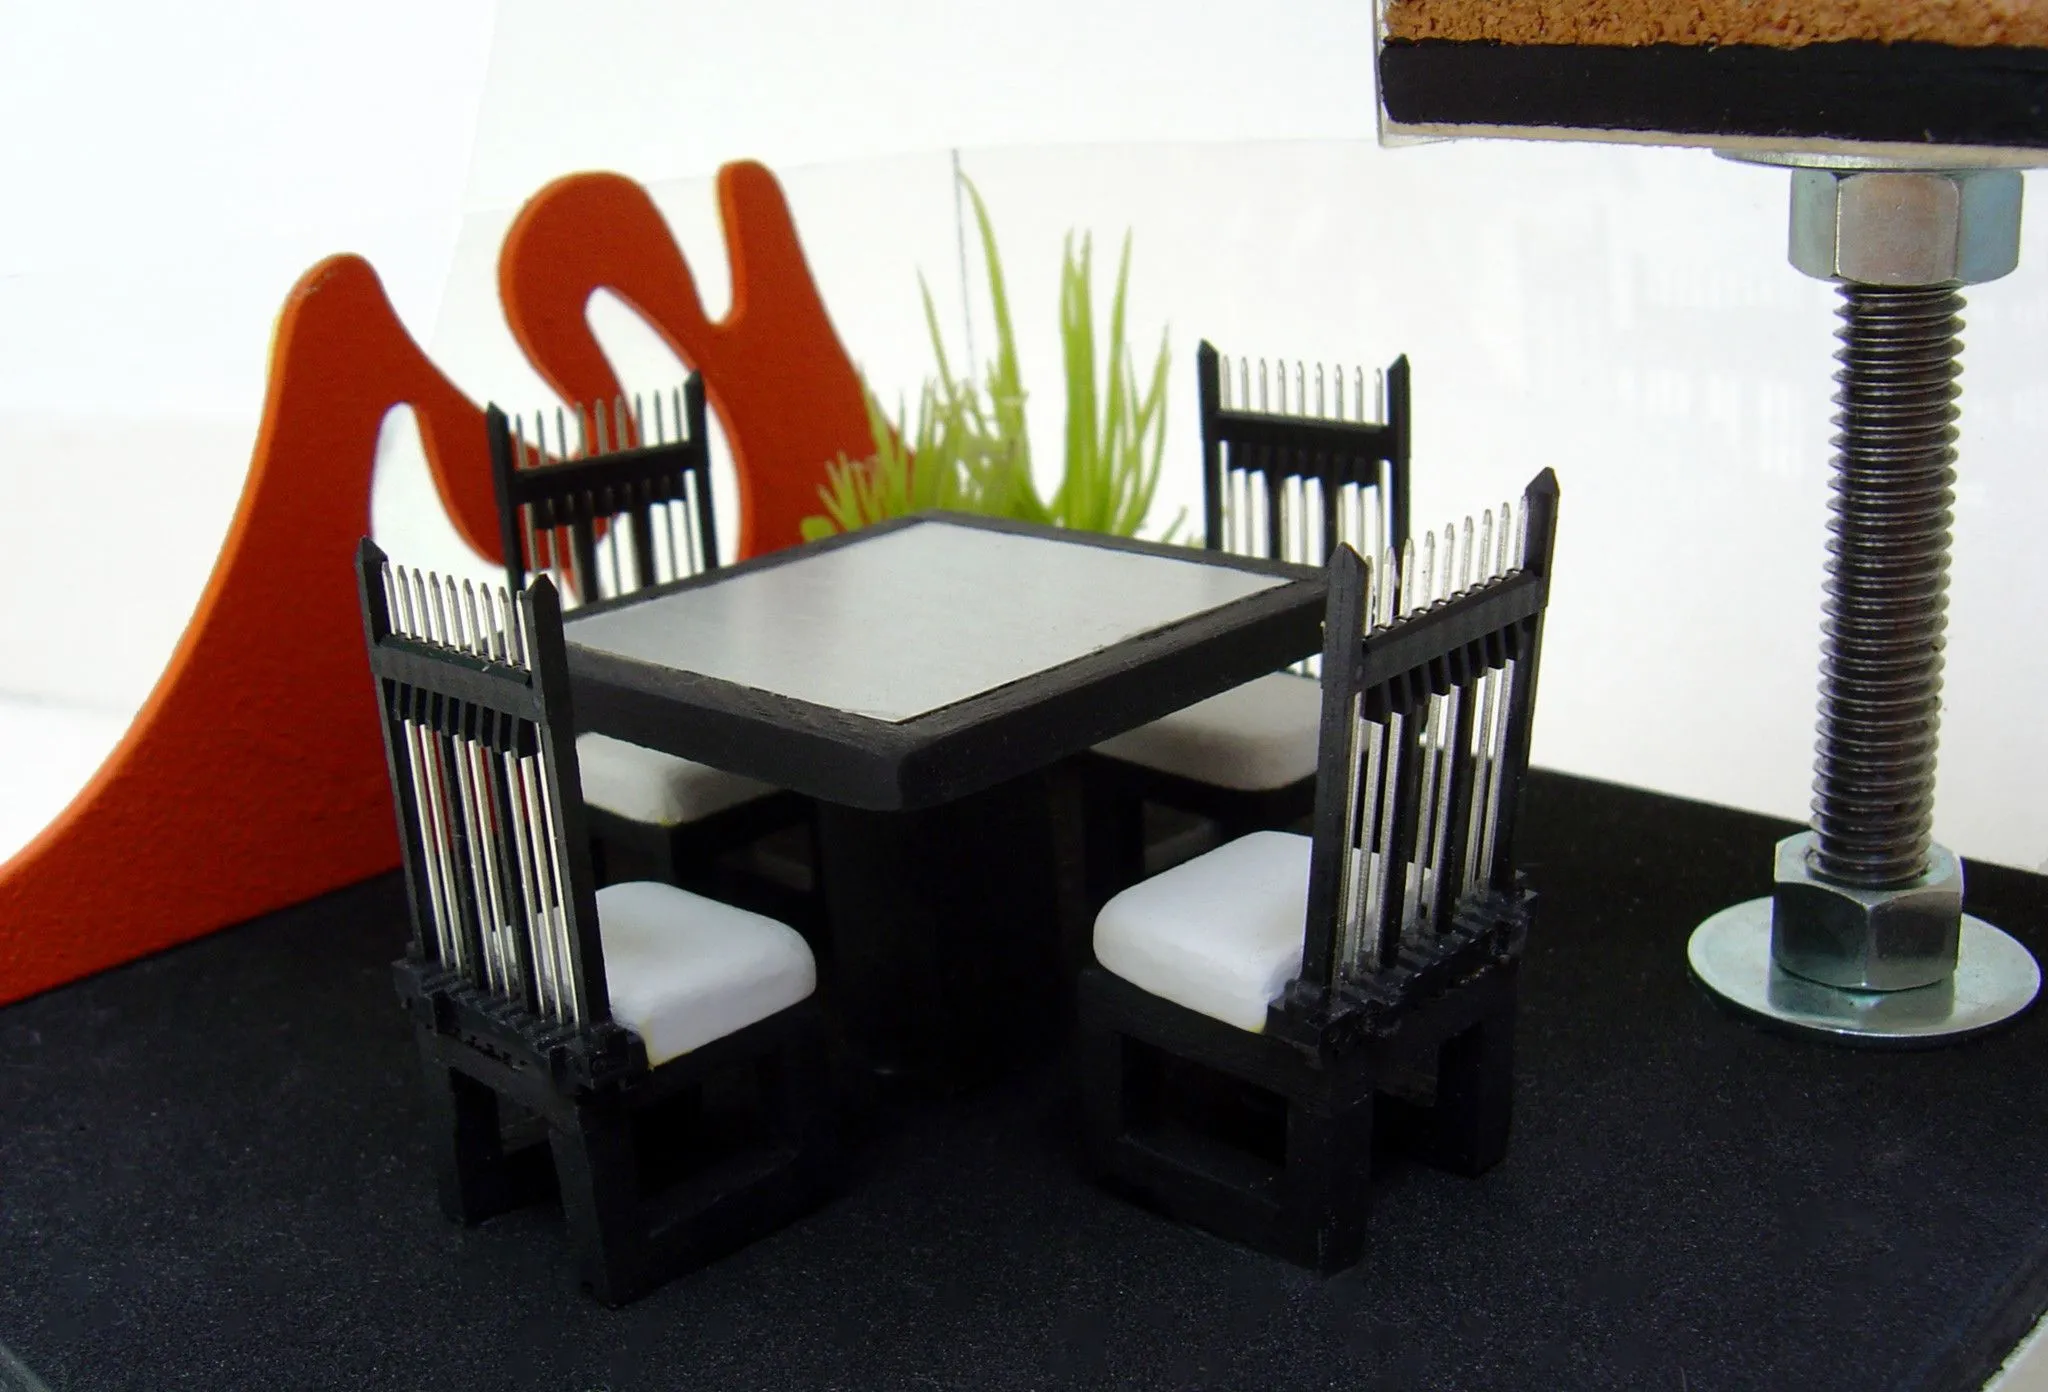 Mini furniture by Catherine Caicedo at Coroflot.